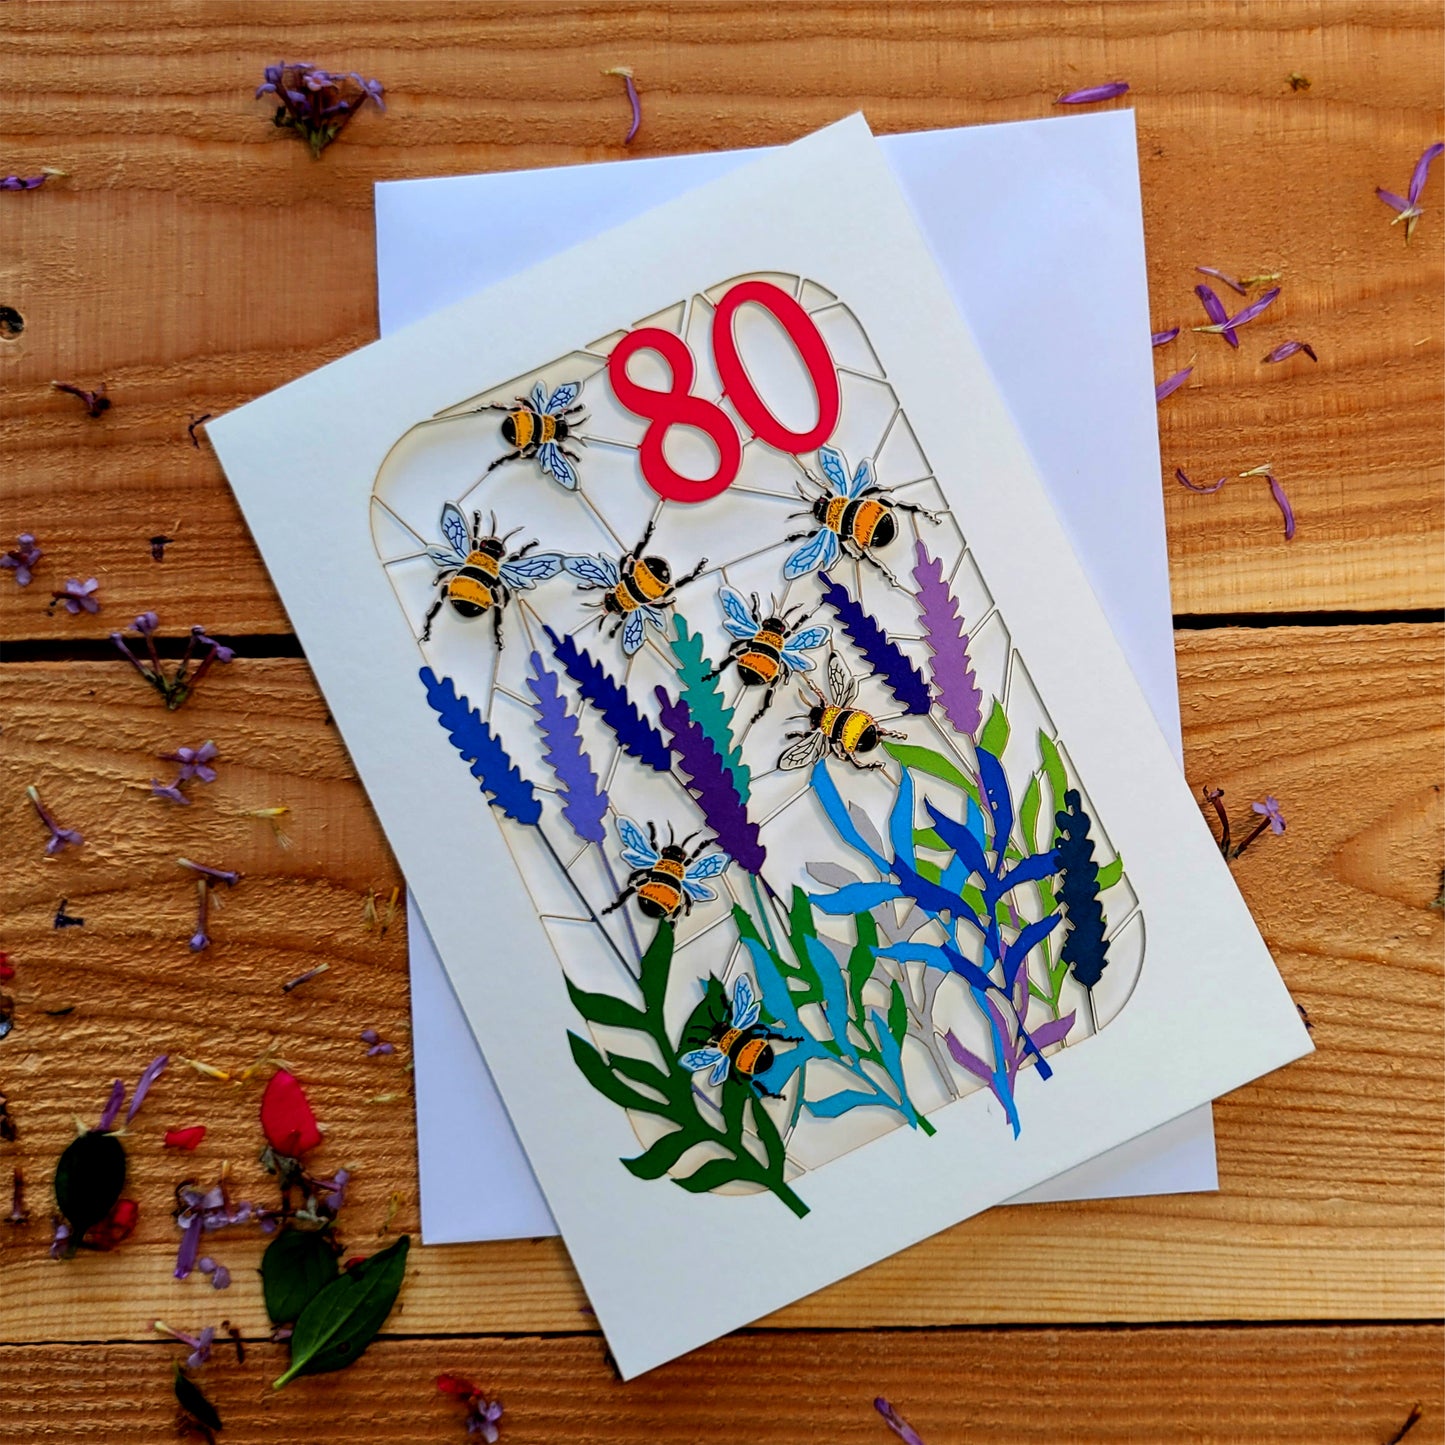 Age 80 Birthday Card, 80th Birthday Card, Bee Card - Be080